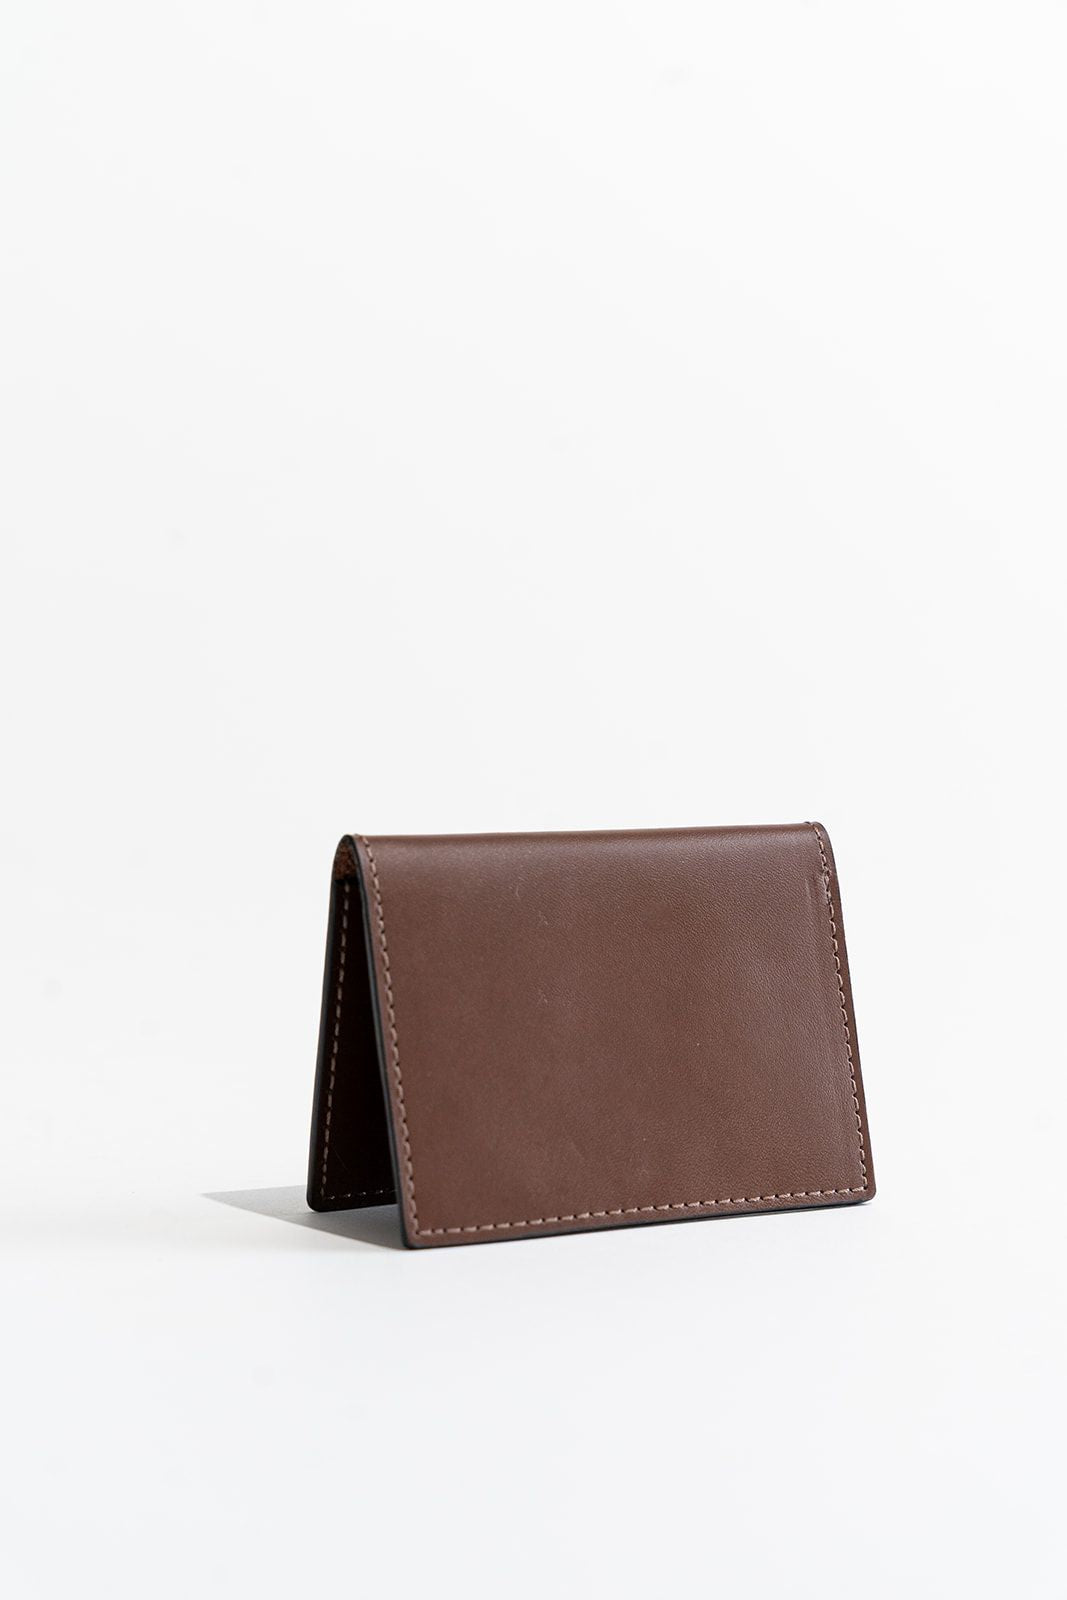 1776 Slim Card Holder | Signature Brown Leather